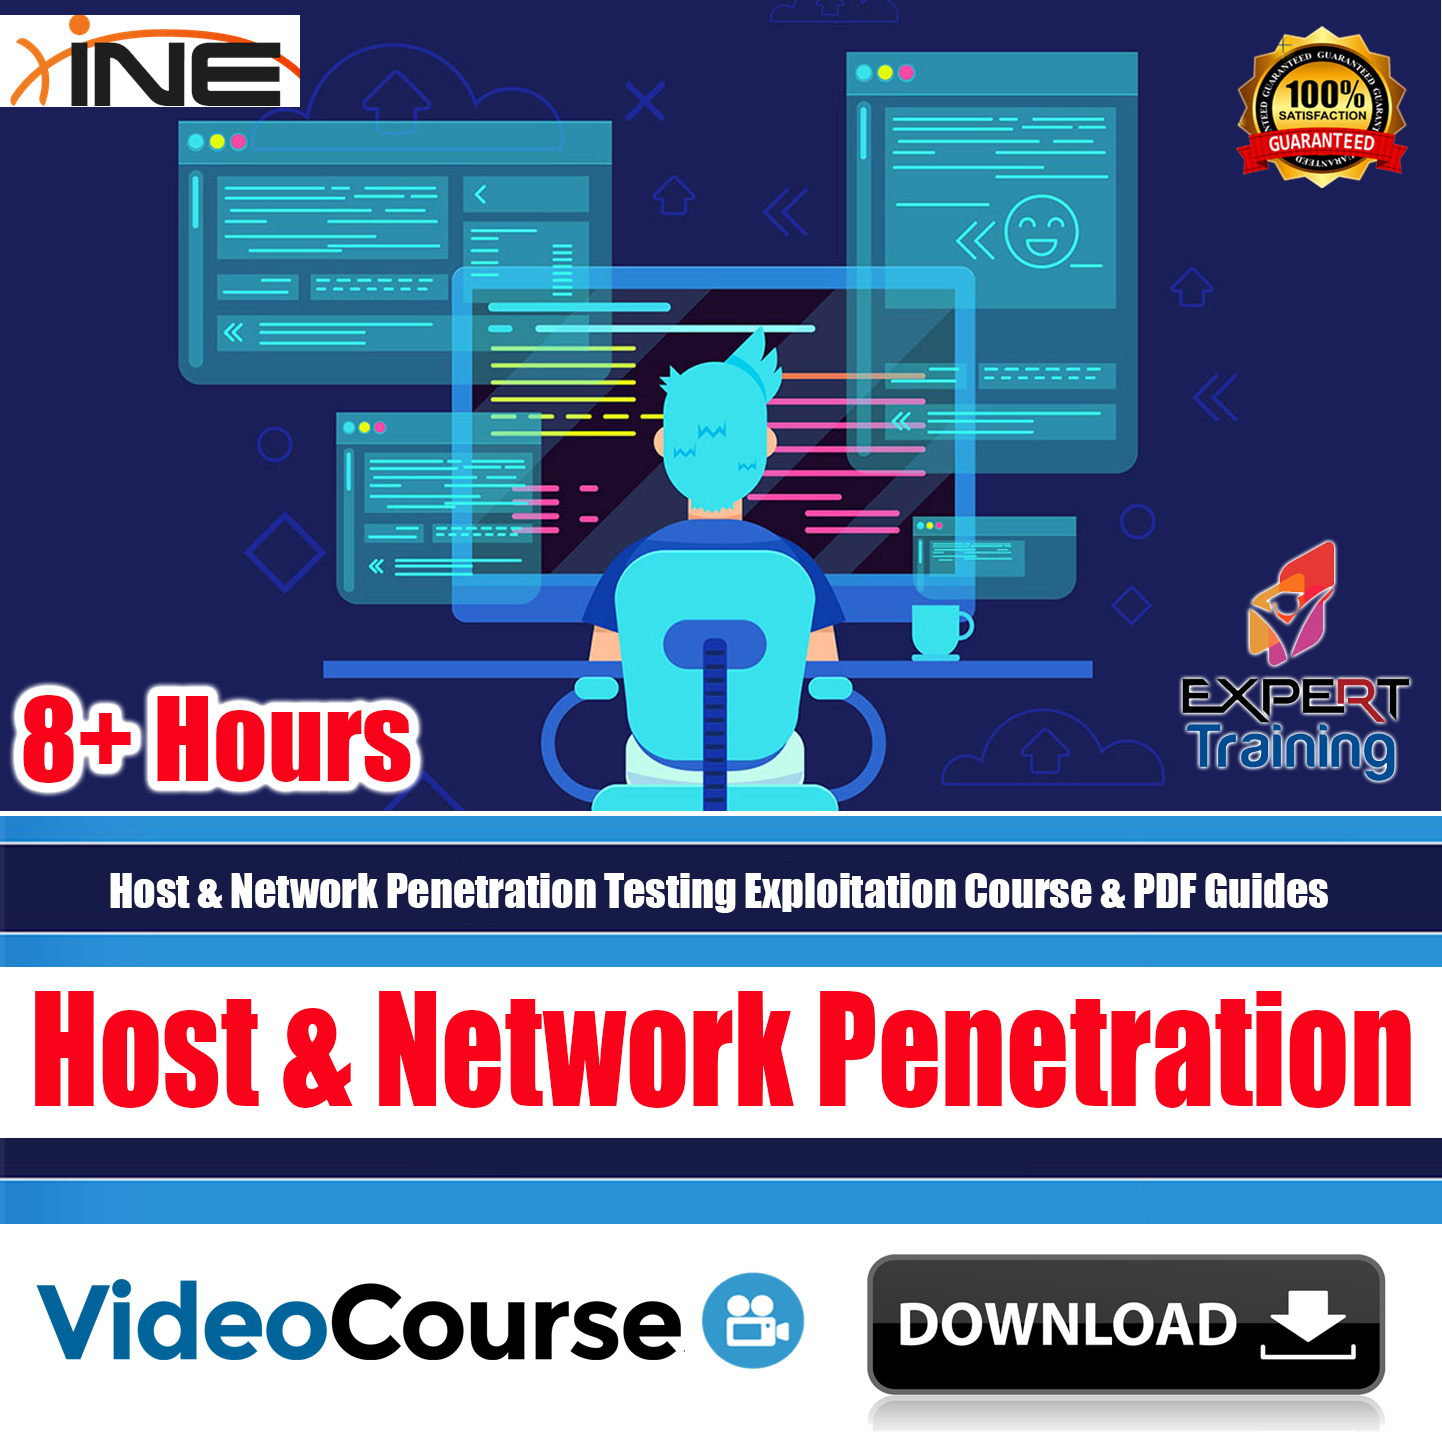 Host & Network Penetration Testing Exploitation Course